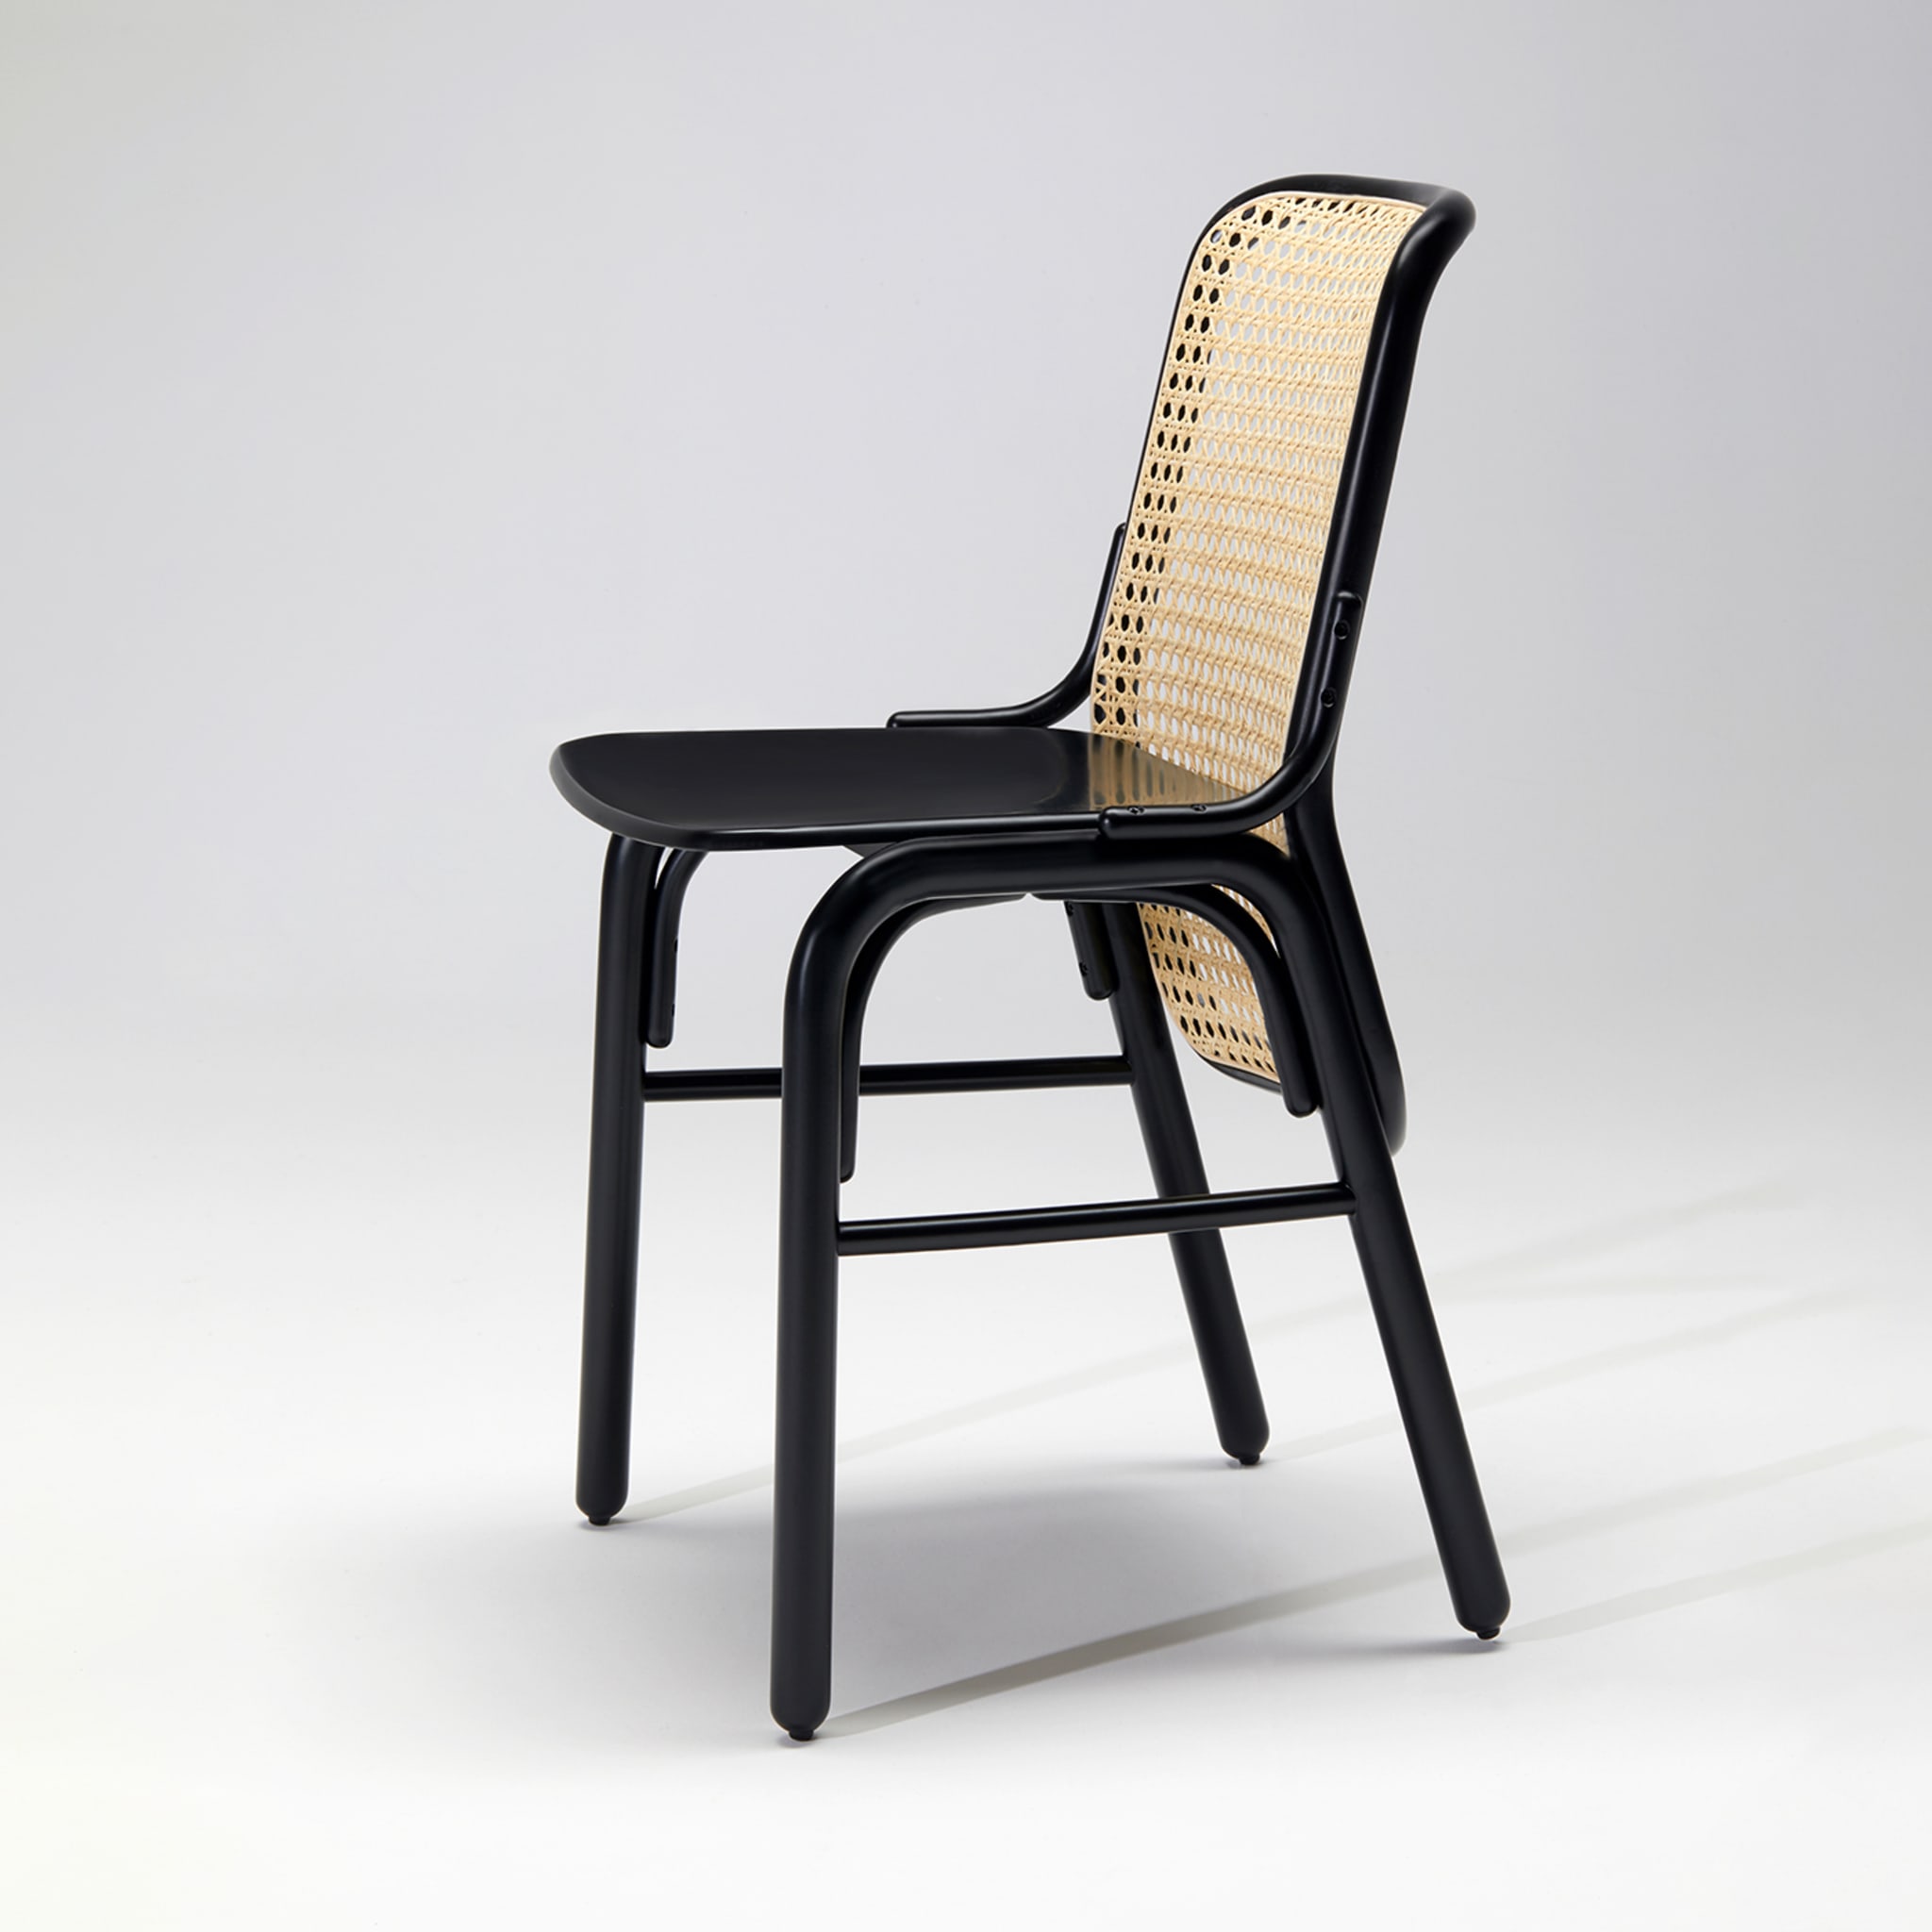 Frantz 885 Black Chair #1 by Gil Sheffi & Yoav Avinoam - Alternative view 1